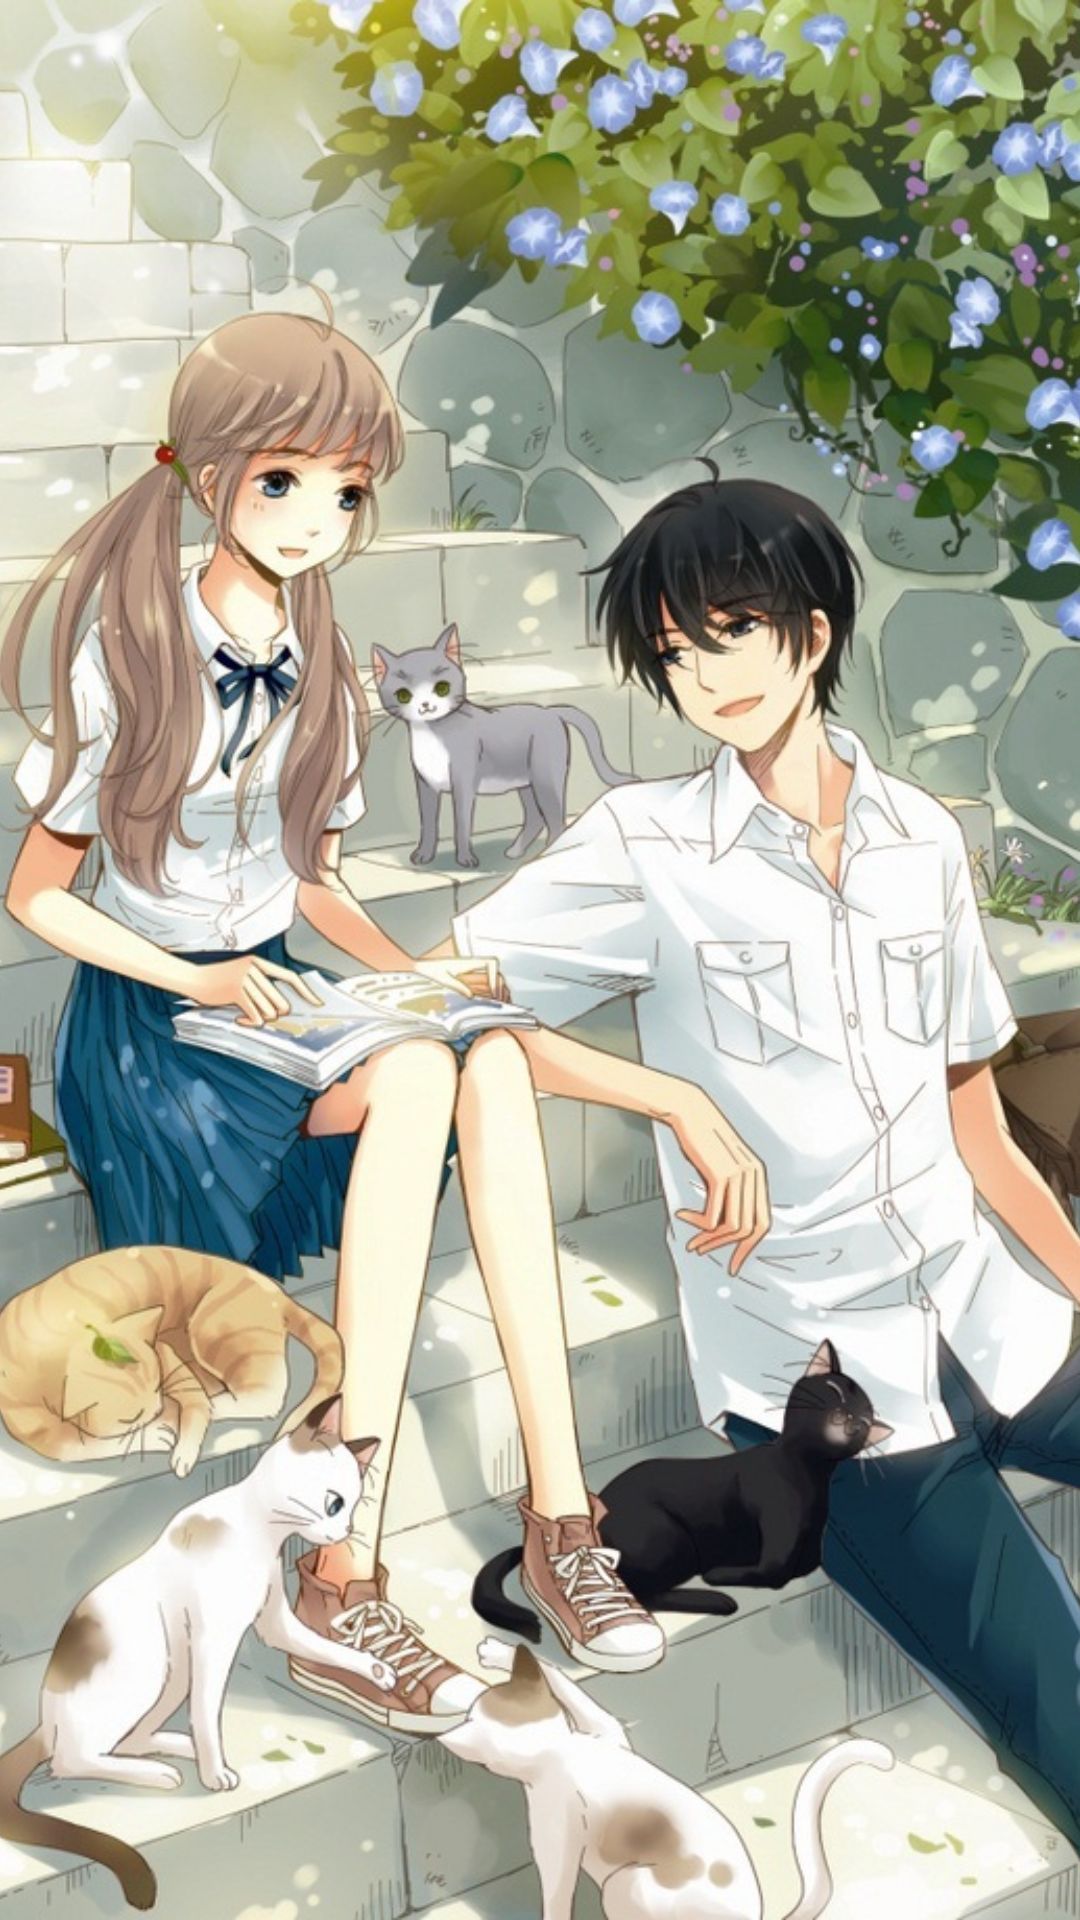 Anime Love Wallpaper Images